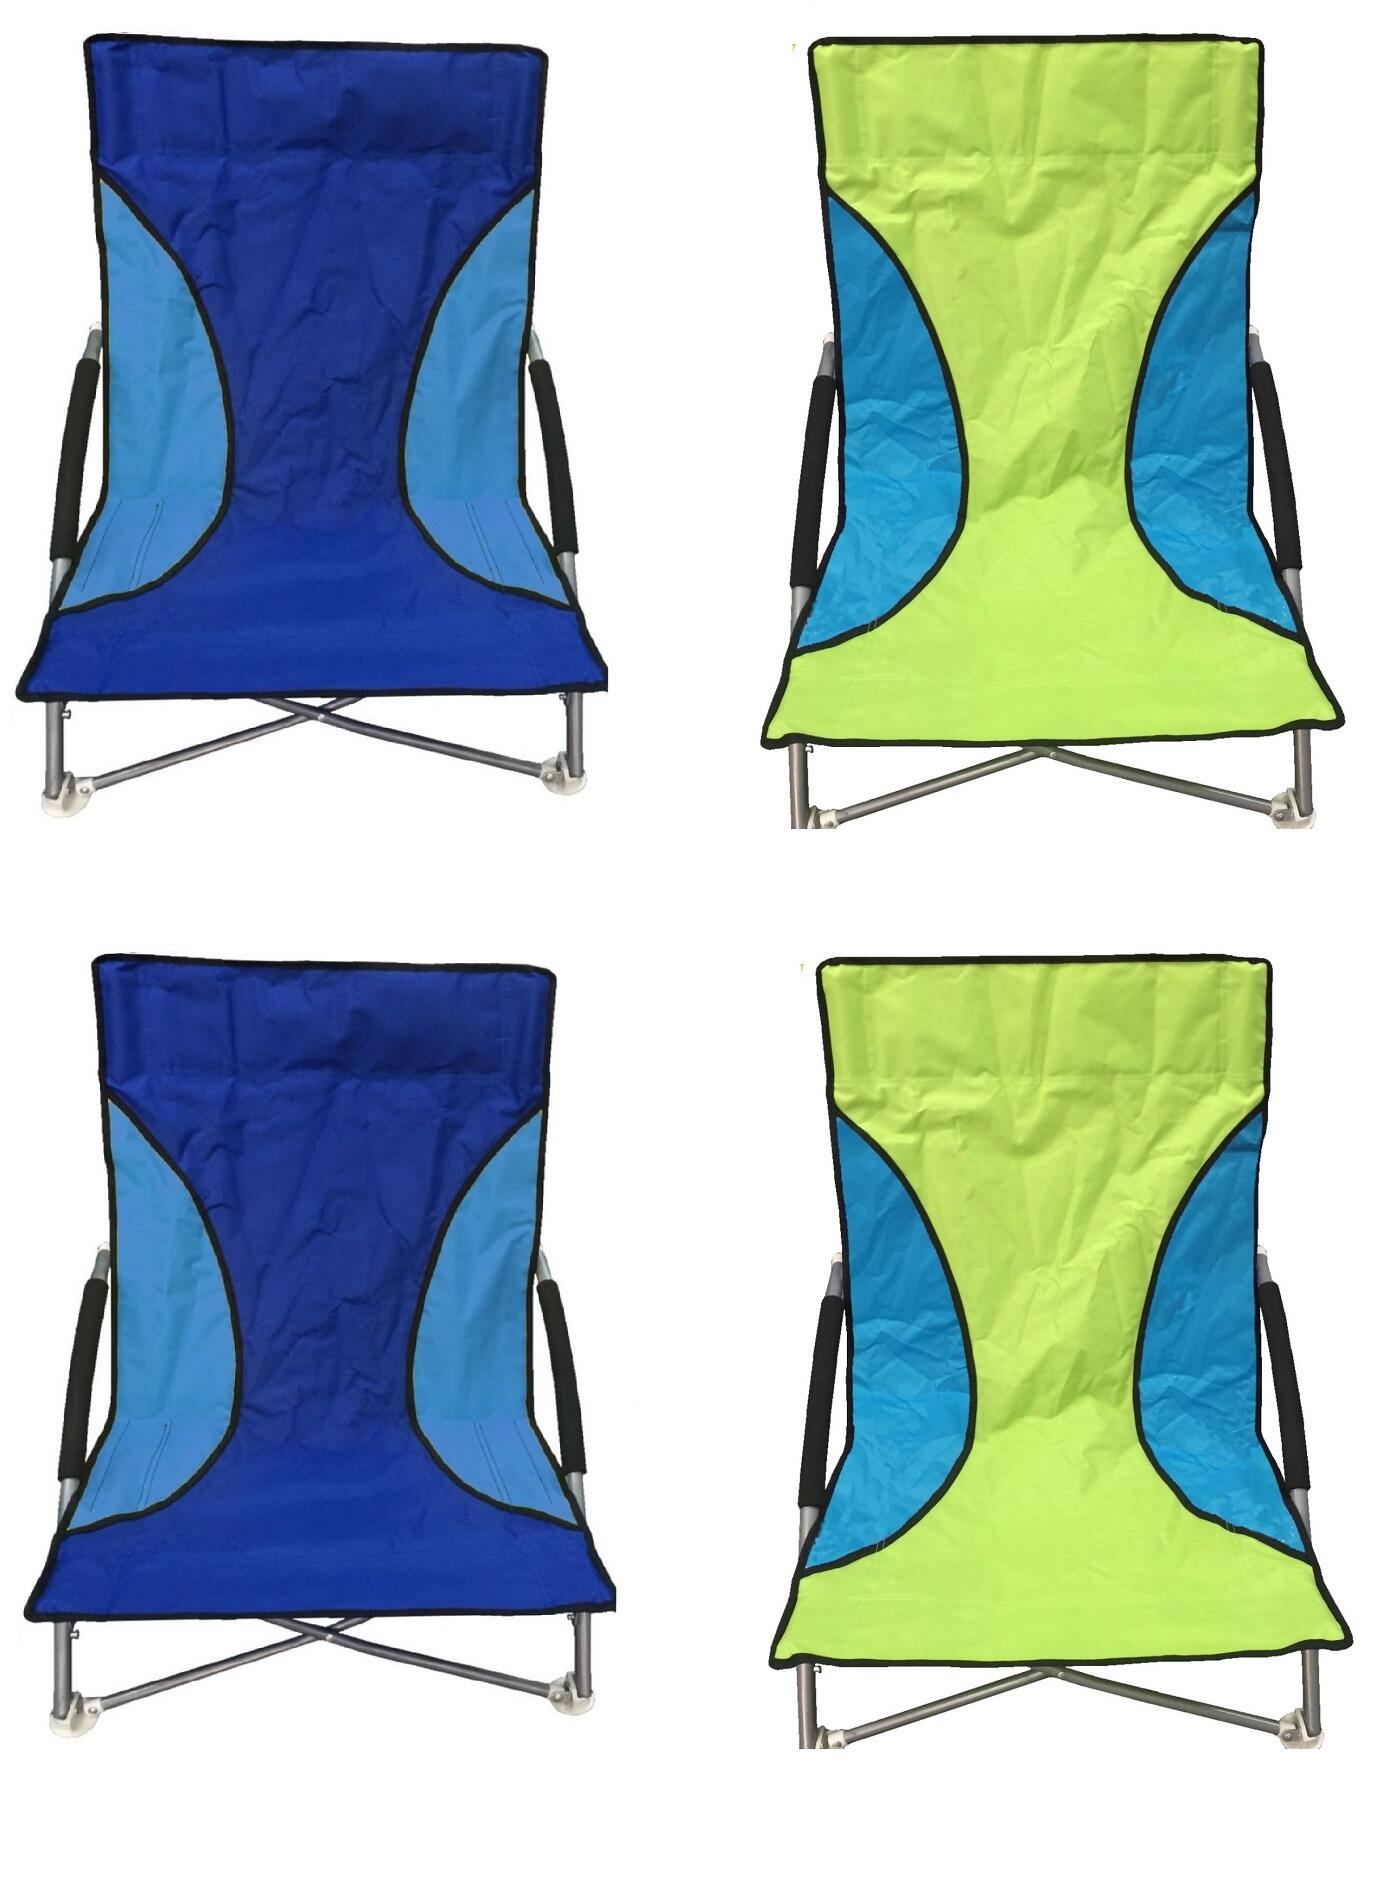 YELLO 4 Nalu Folding Low Seat Beach Chair Camping Chairs - 2 Green & 2 Blue